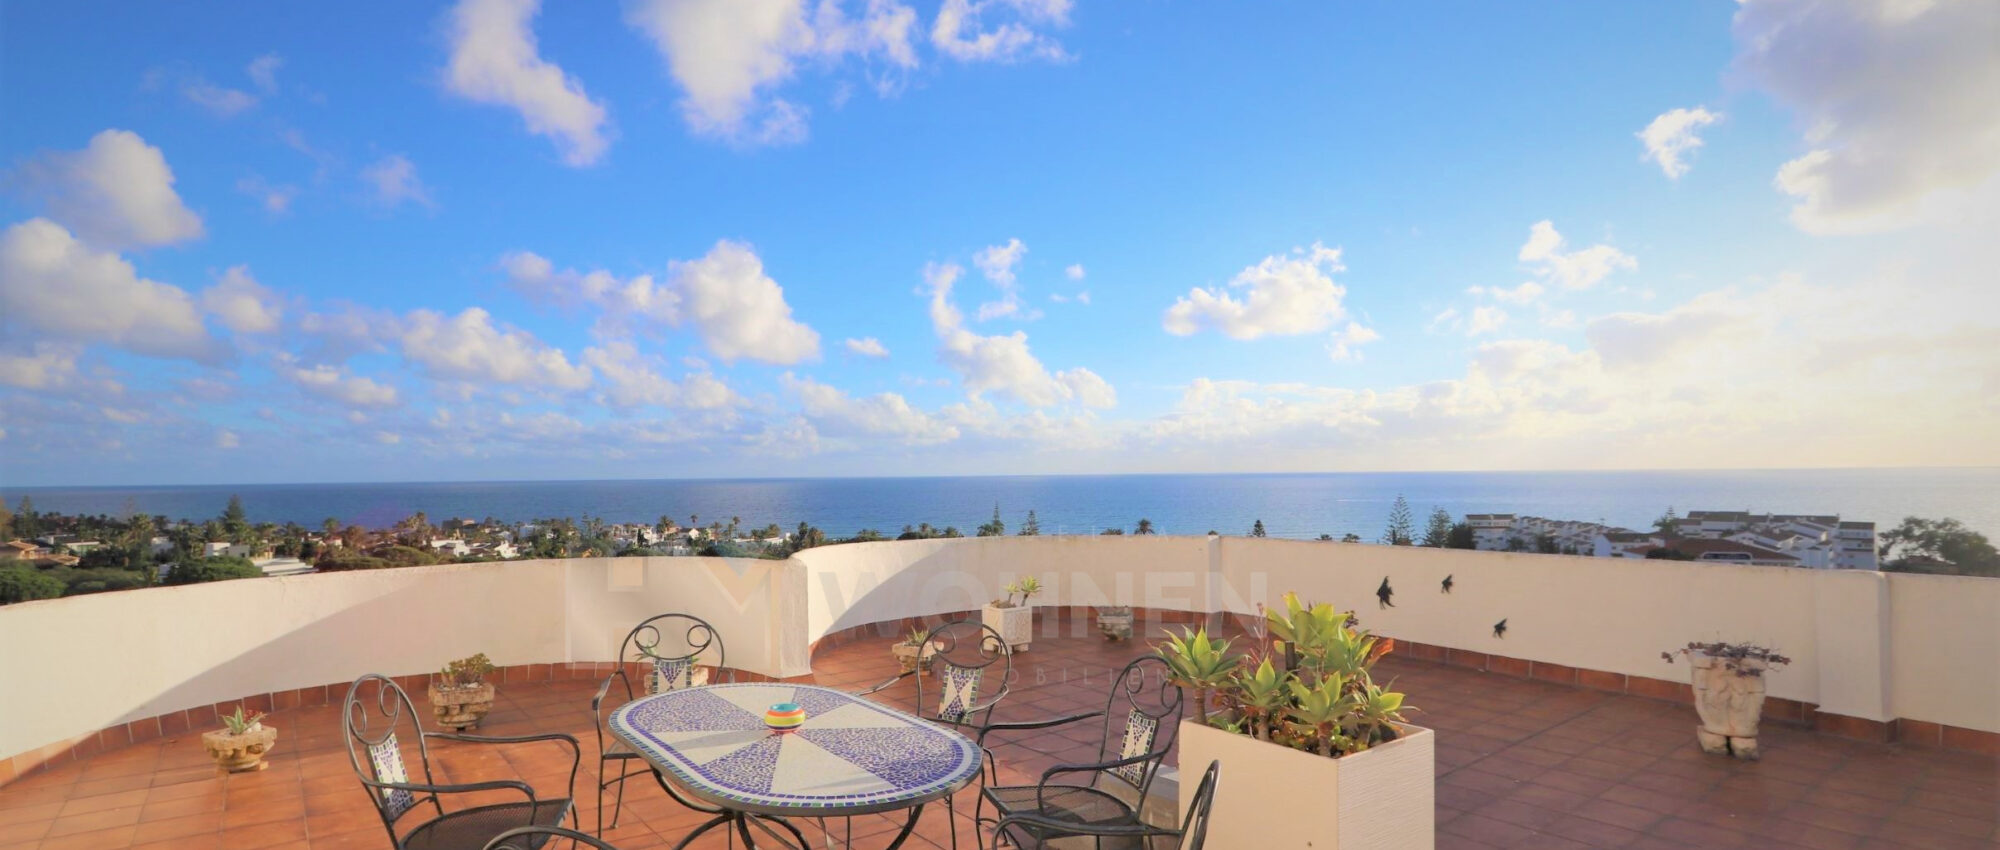 Penthouse in El Coronado Marbesa with Breathtaking Panoramic Views of the Sea